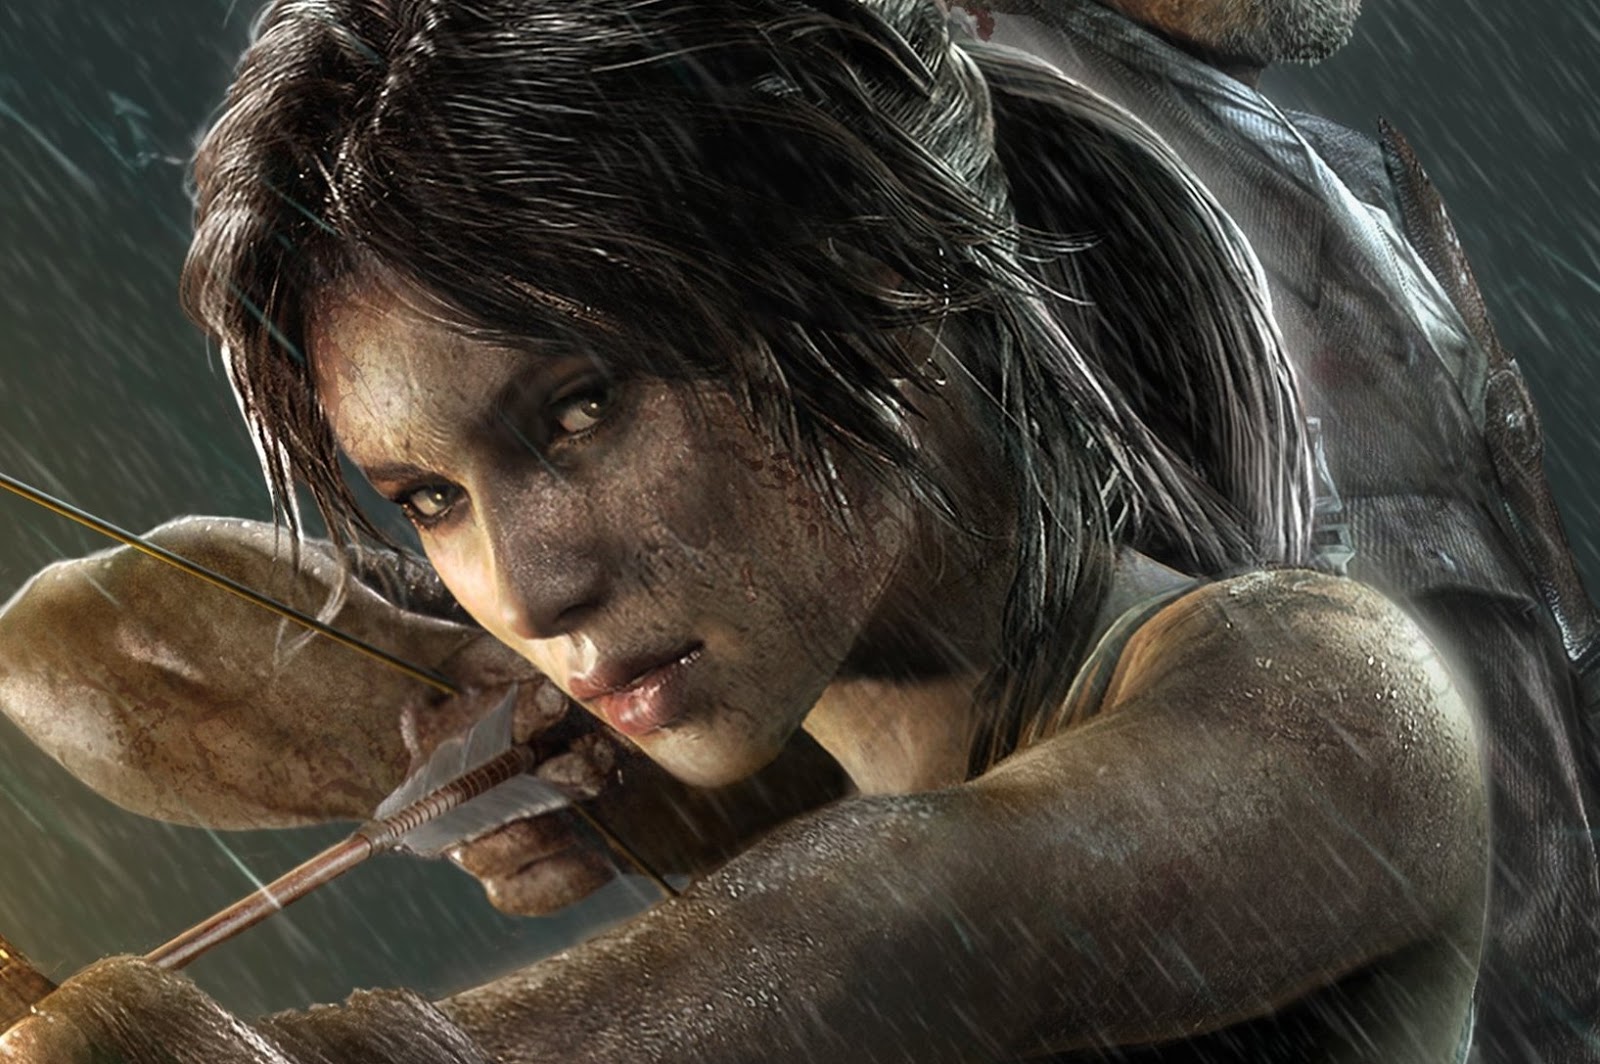 Lara-Croft-from-Tomb-Raider-aiming-bow